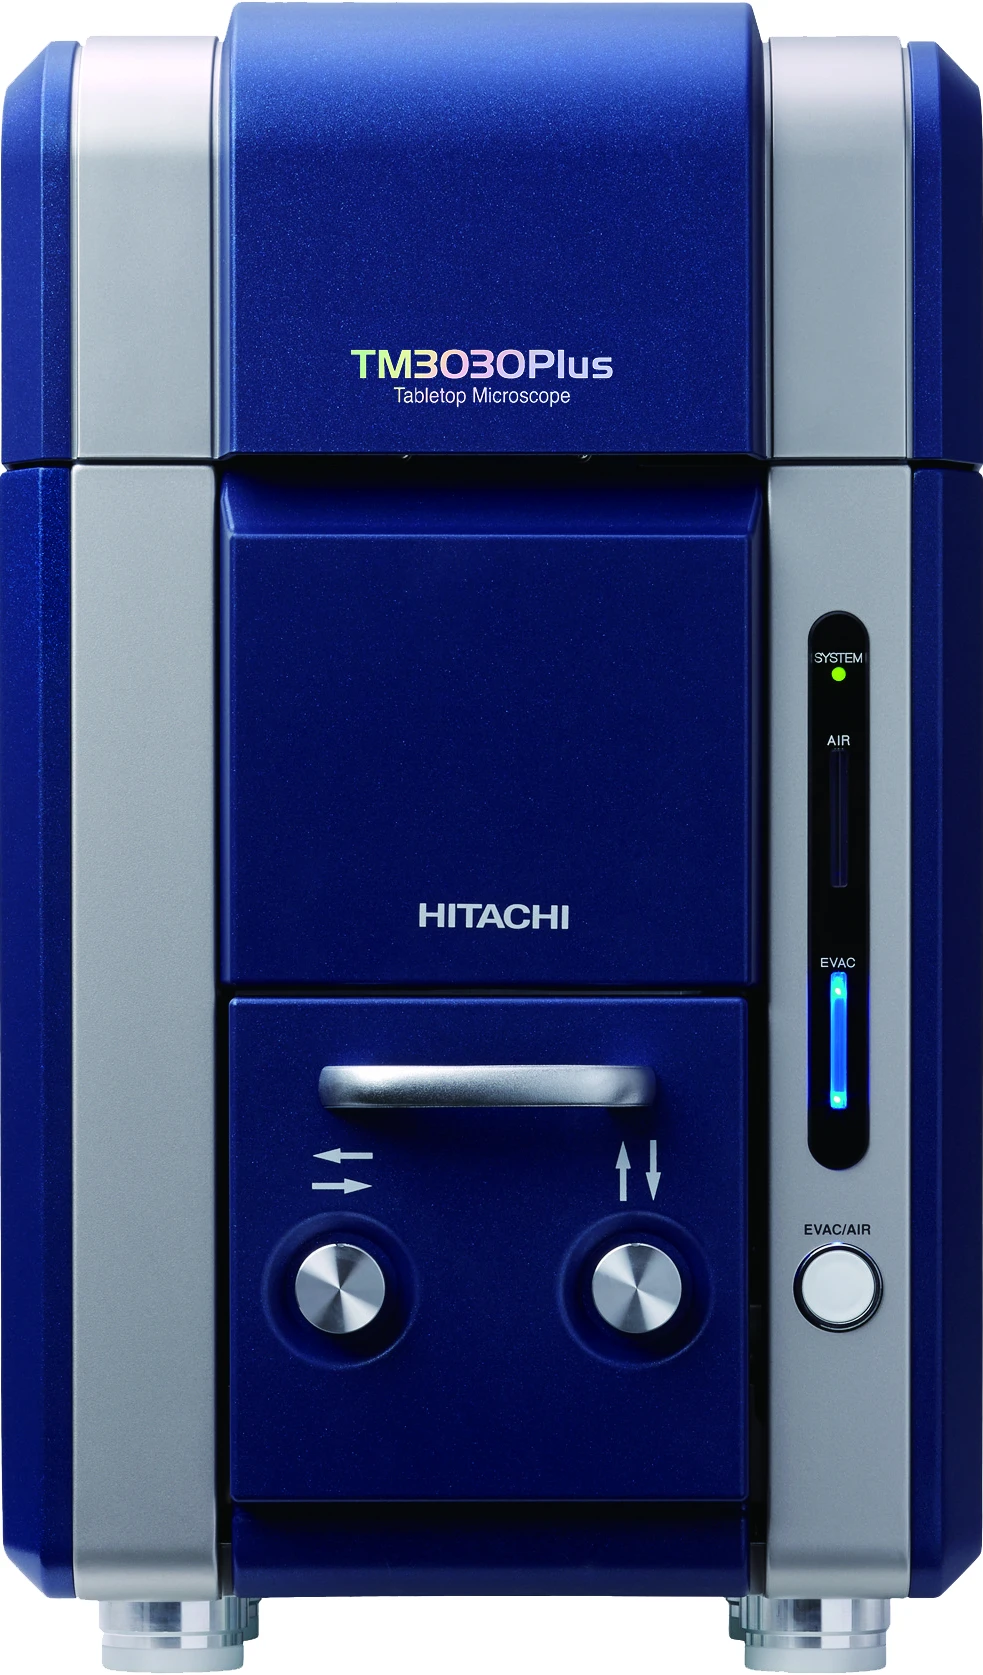 Hitachi TM3030Plus Tabletop SEM